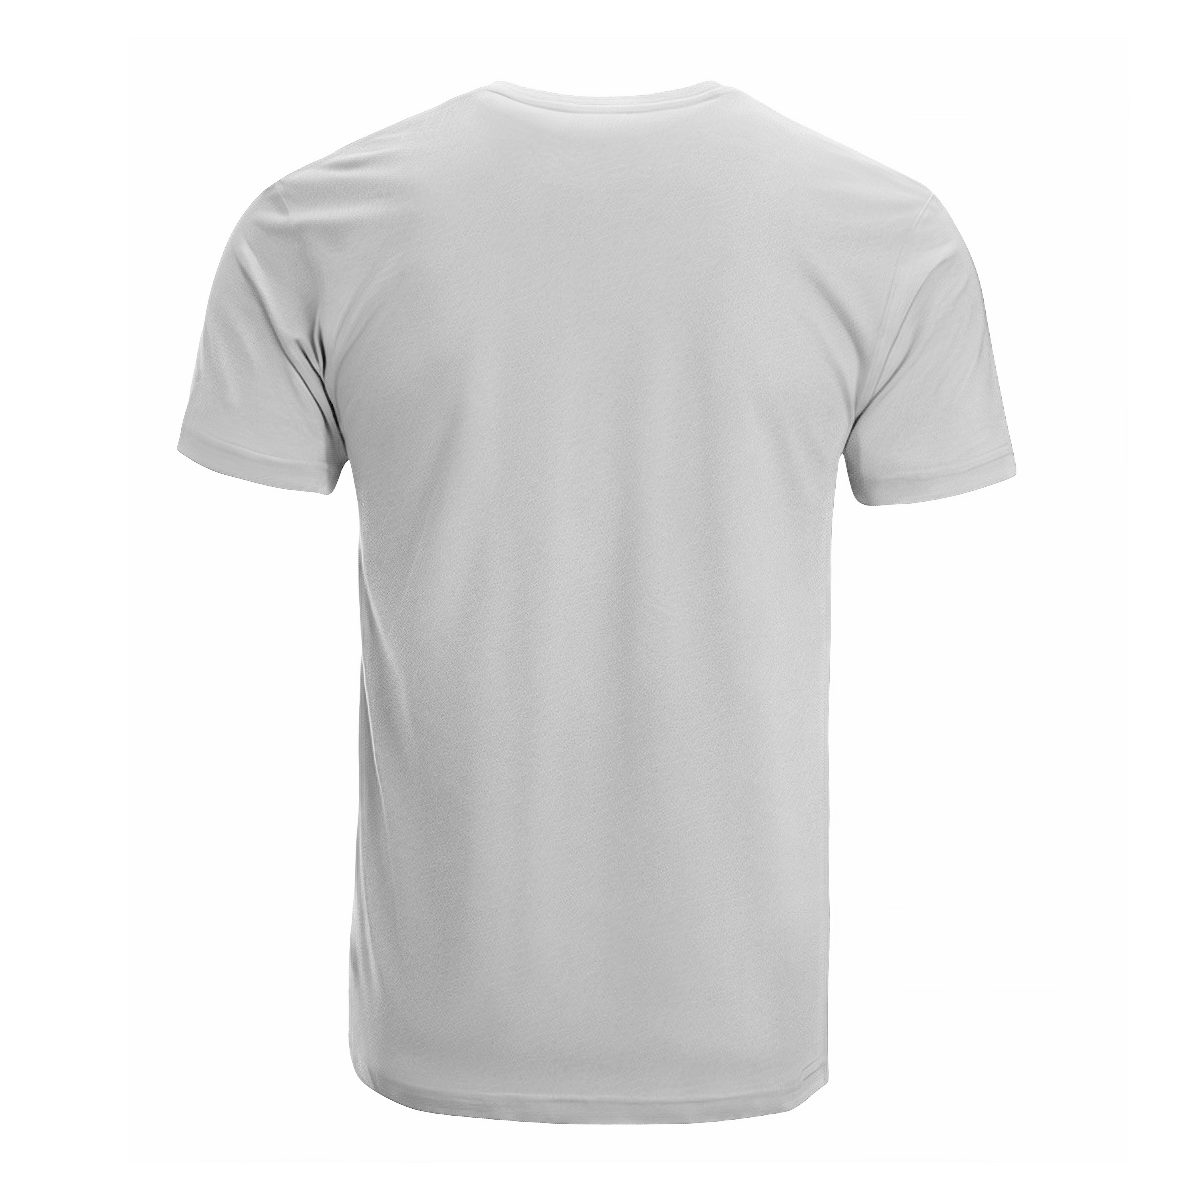 Whiteford Tartan Crest T-shirt - I'm not yelling style